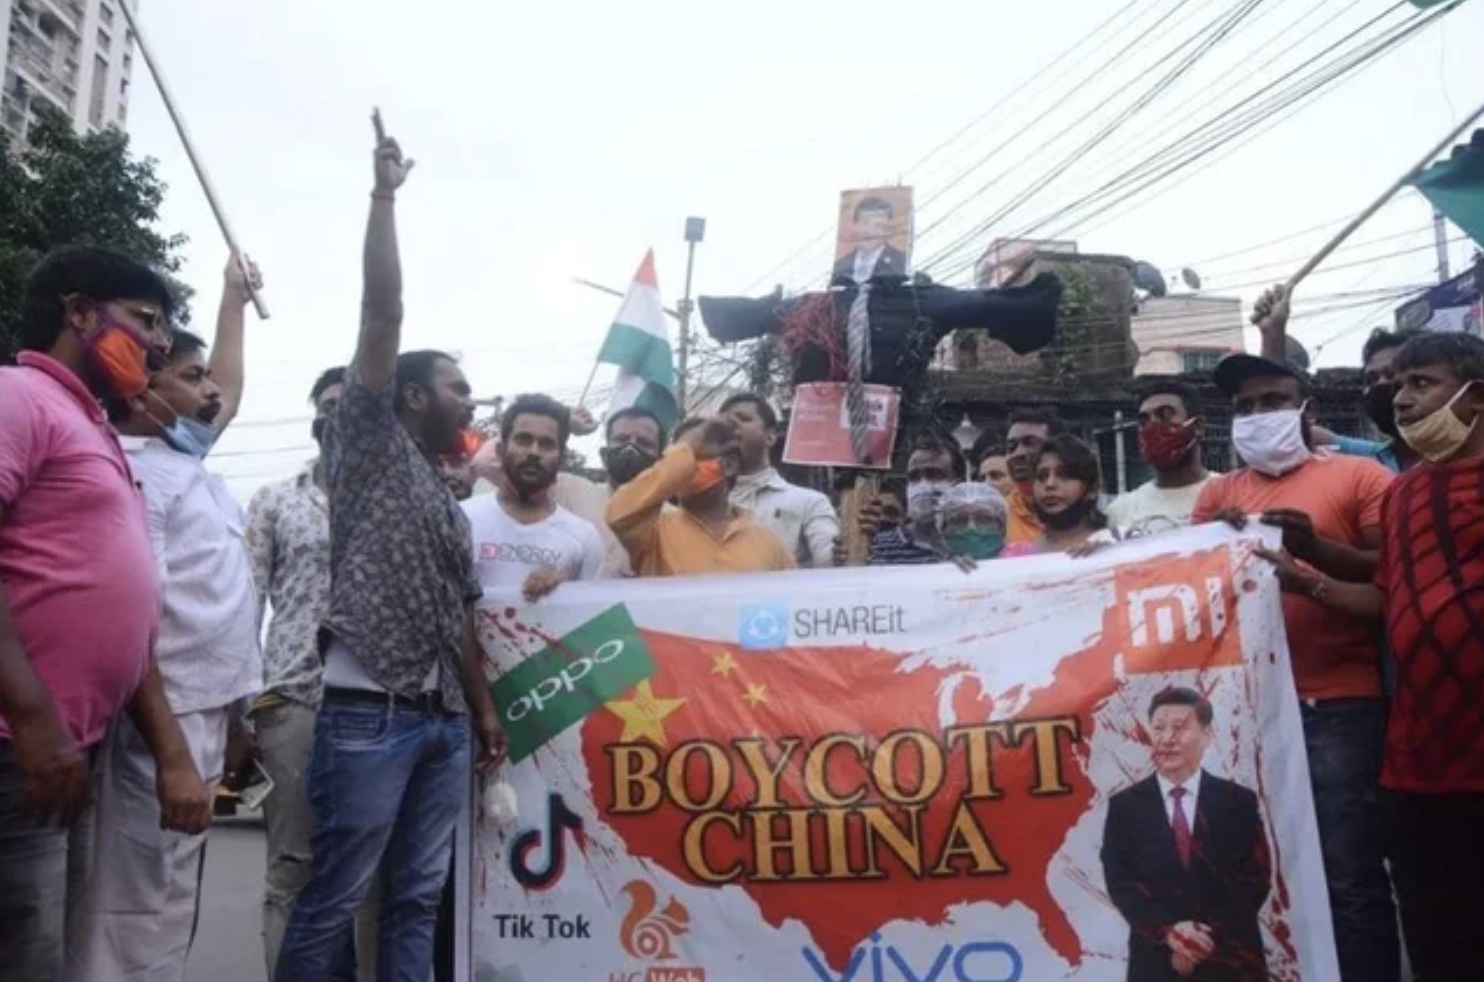 Facepalms - india boycott china - oppo Boycott China Tik Tok & it Cittas